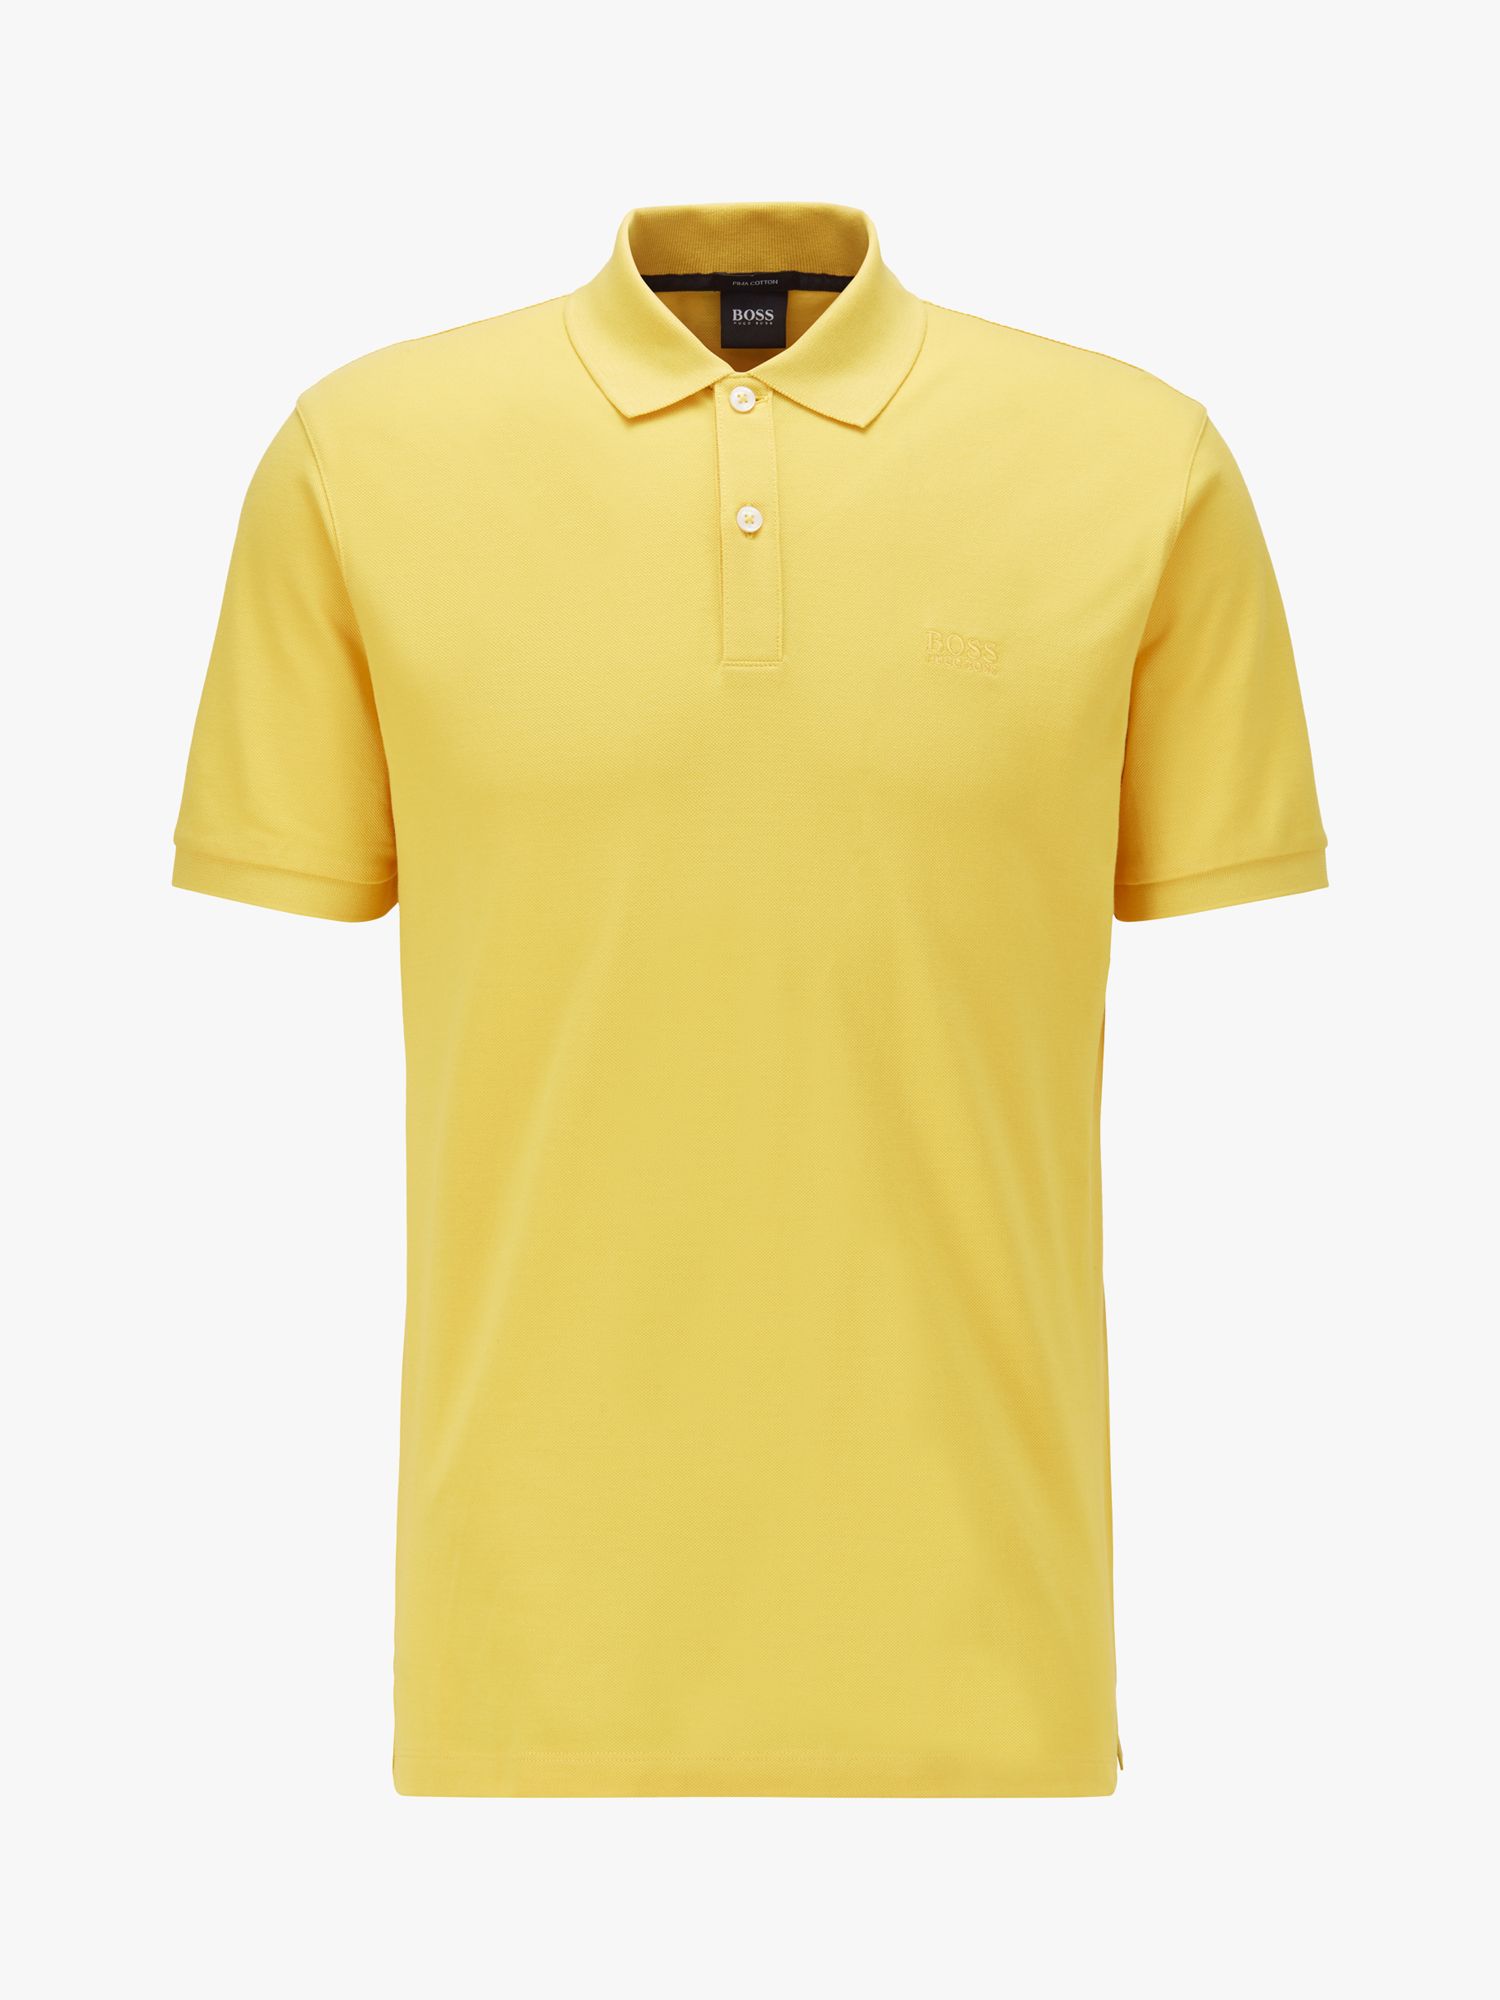 BOSS Pallas Regular Fit Polo Shirt, Bright Yellow at John Lewis & Partners